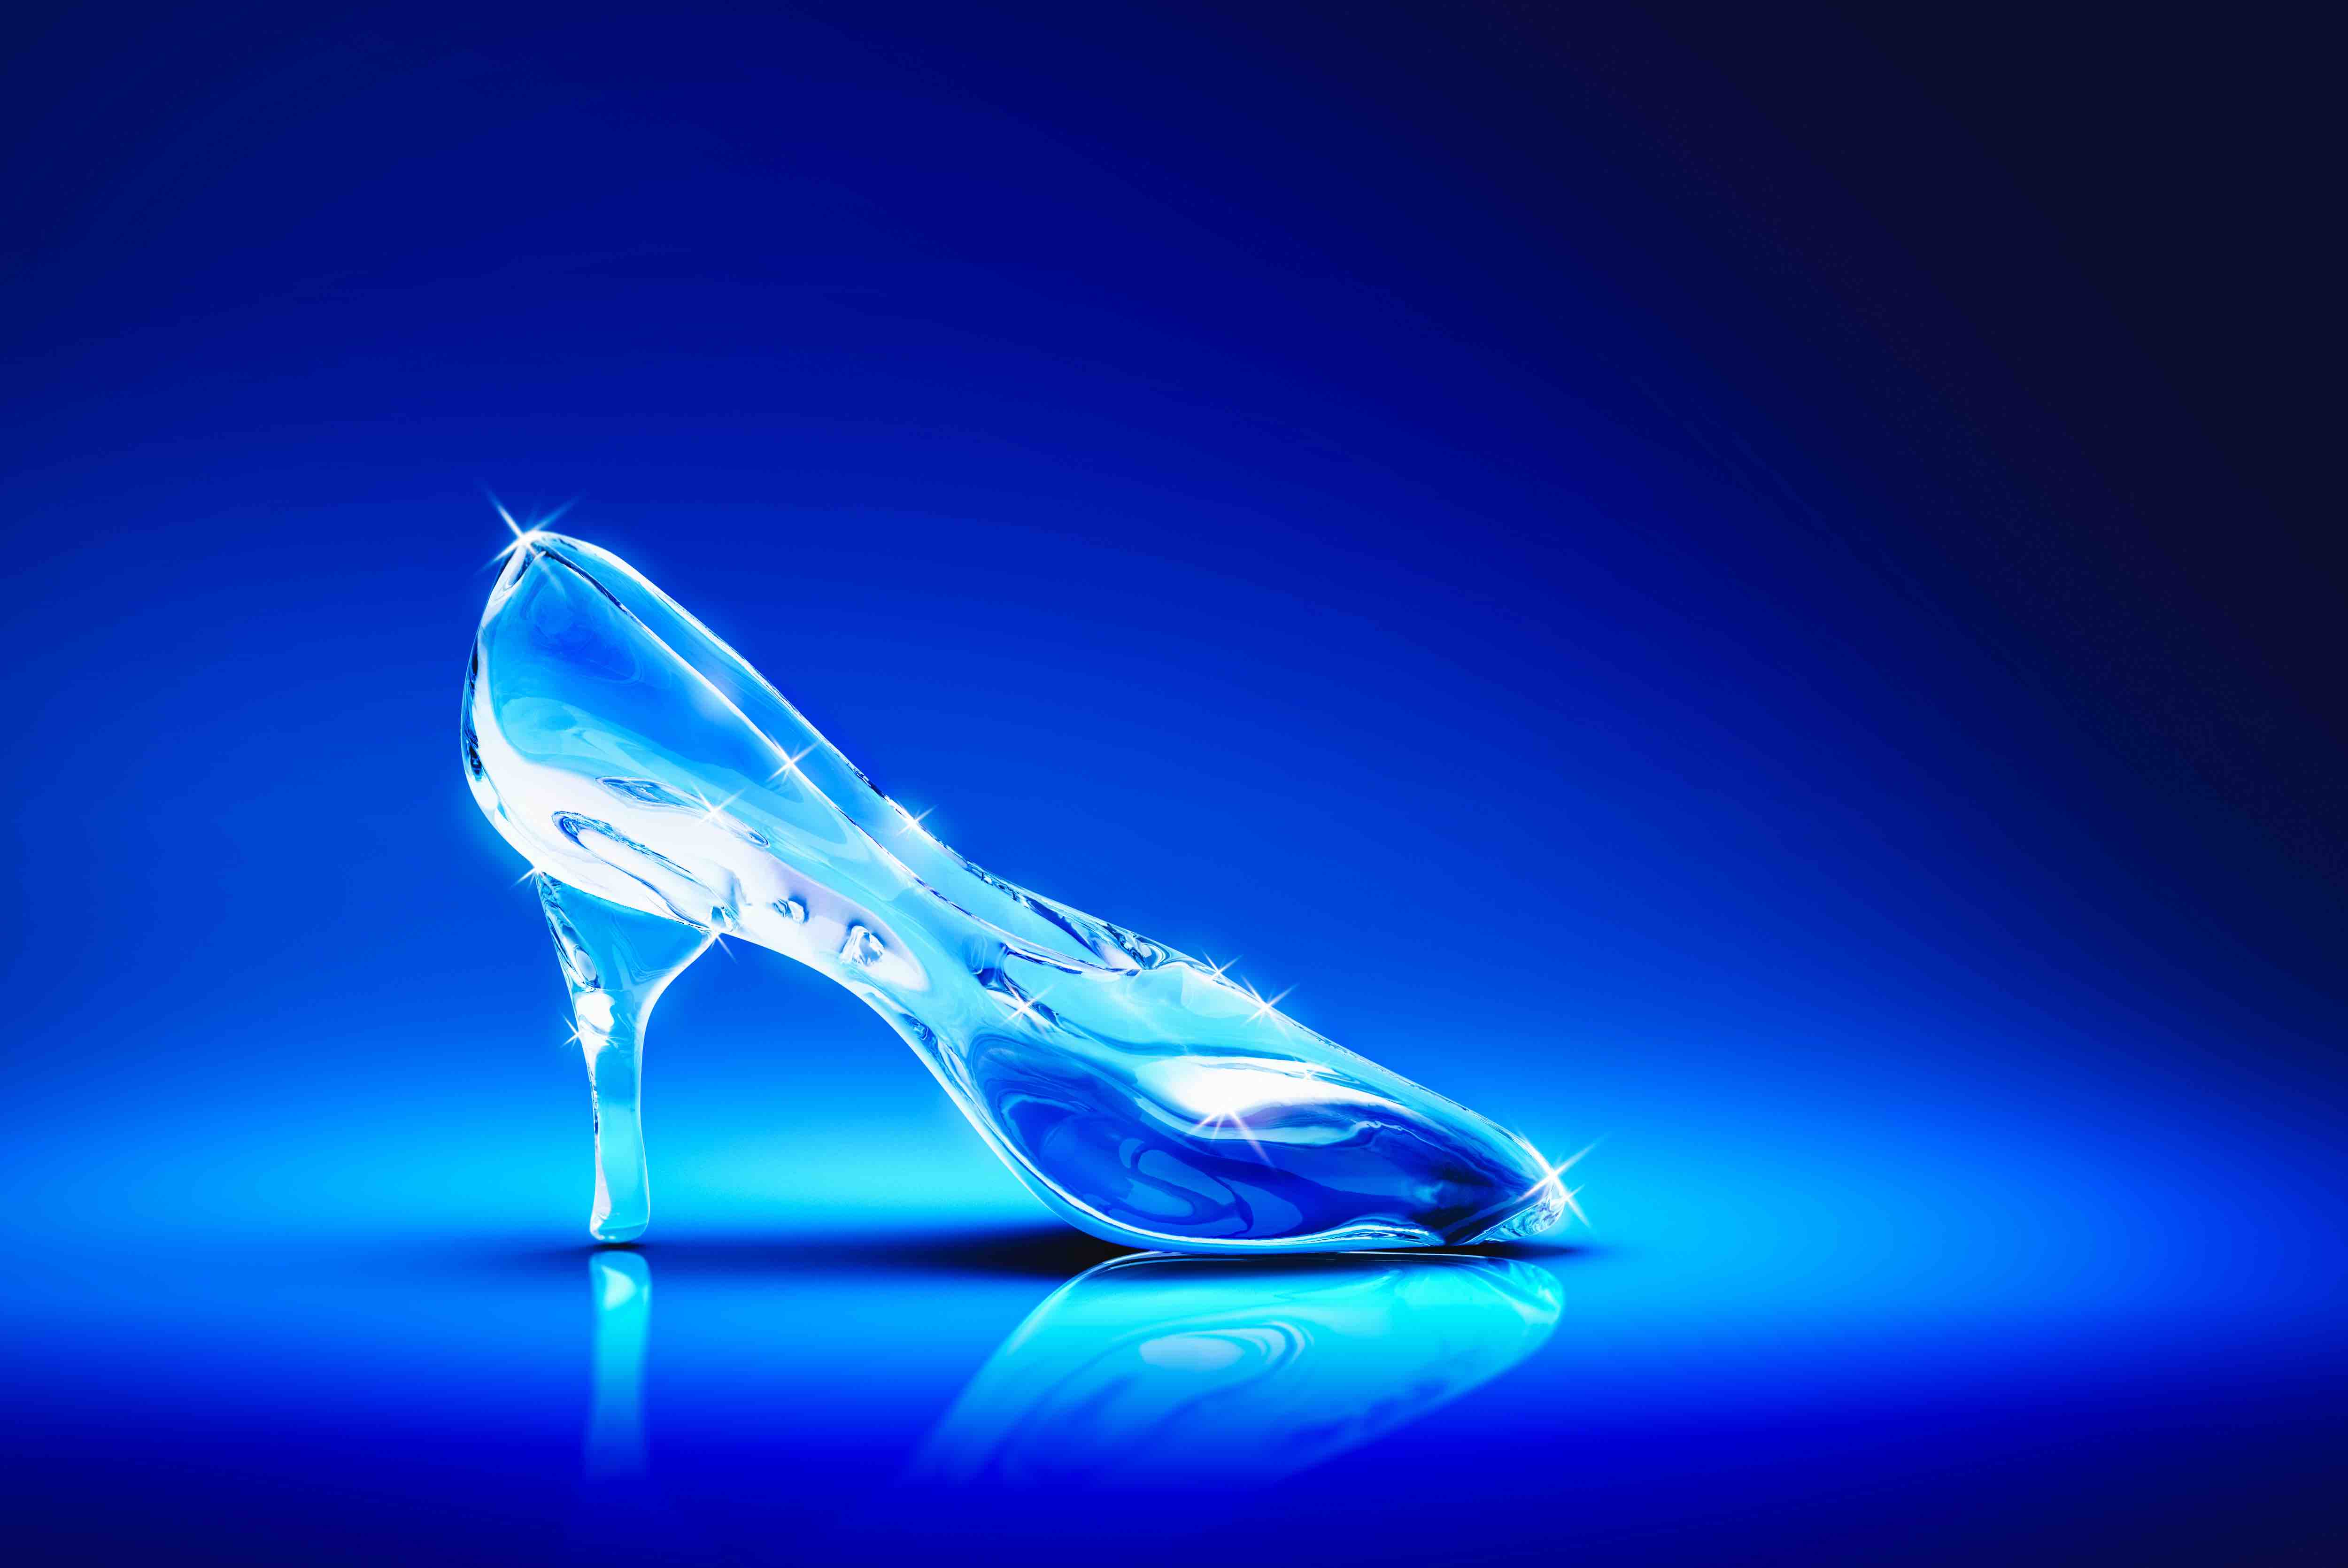 The Modern Day Cinderella Glass Slipper